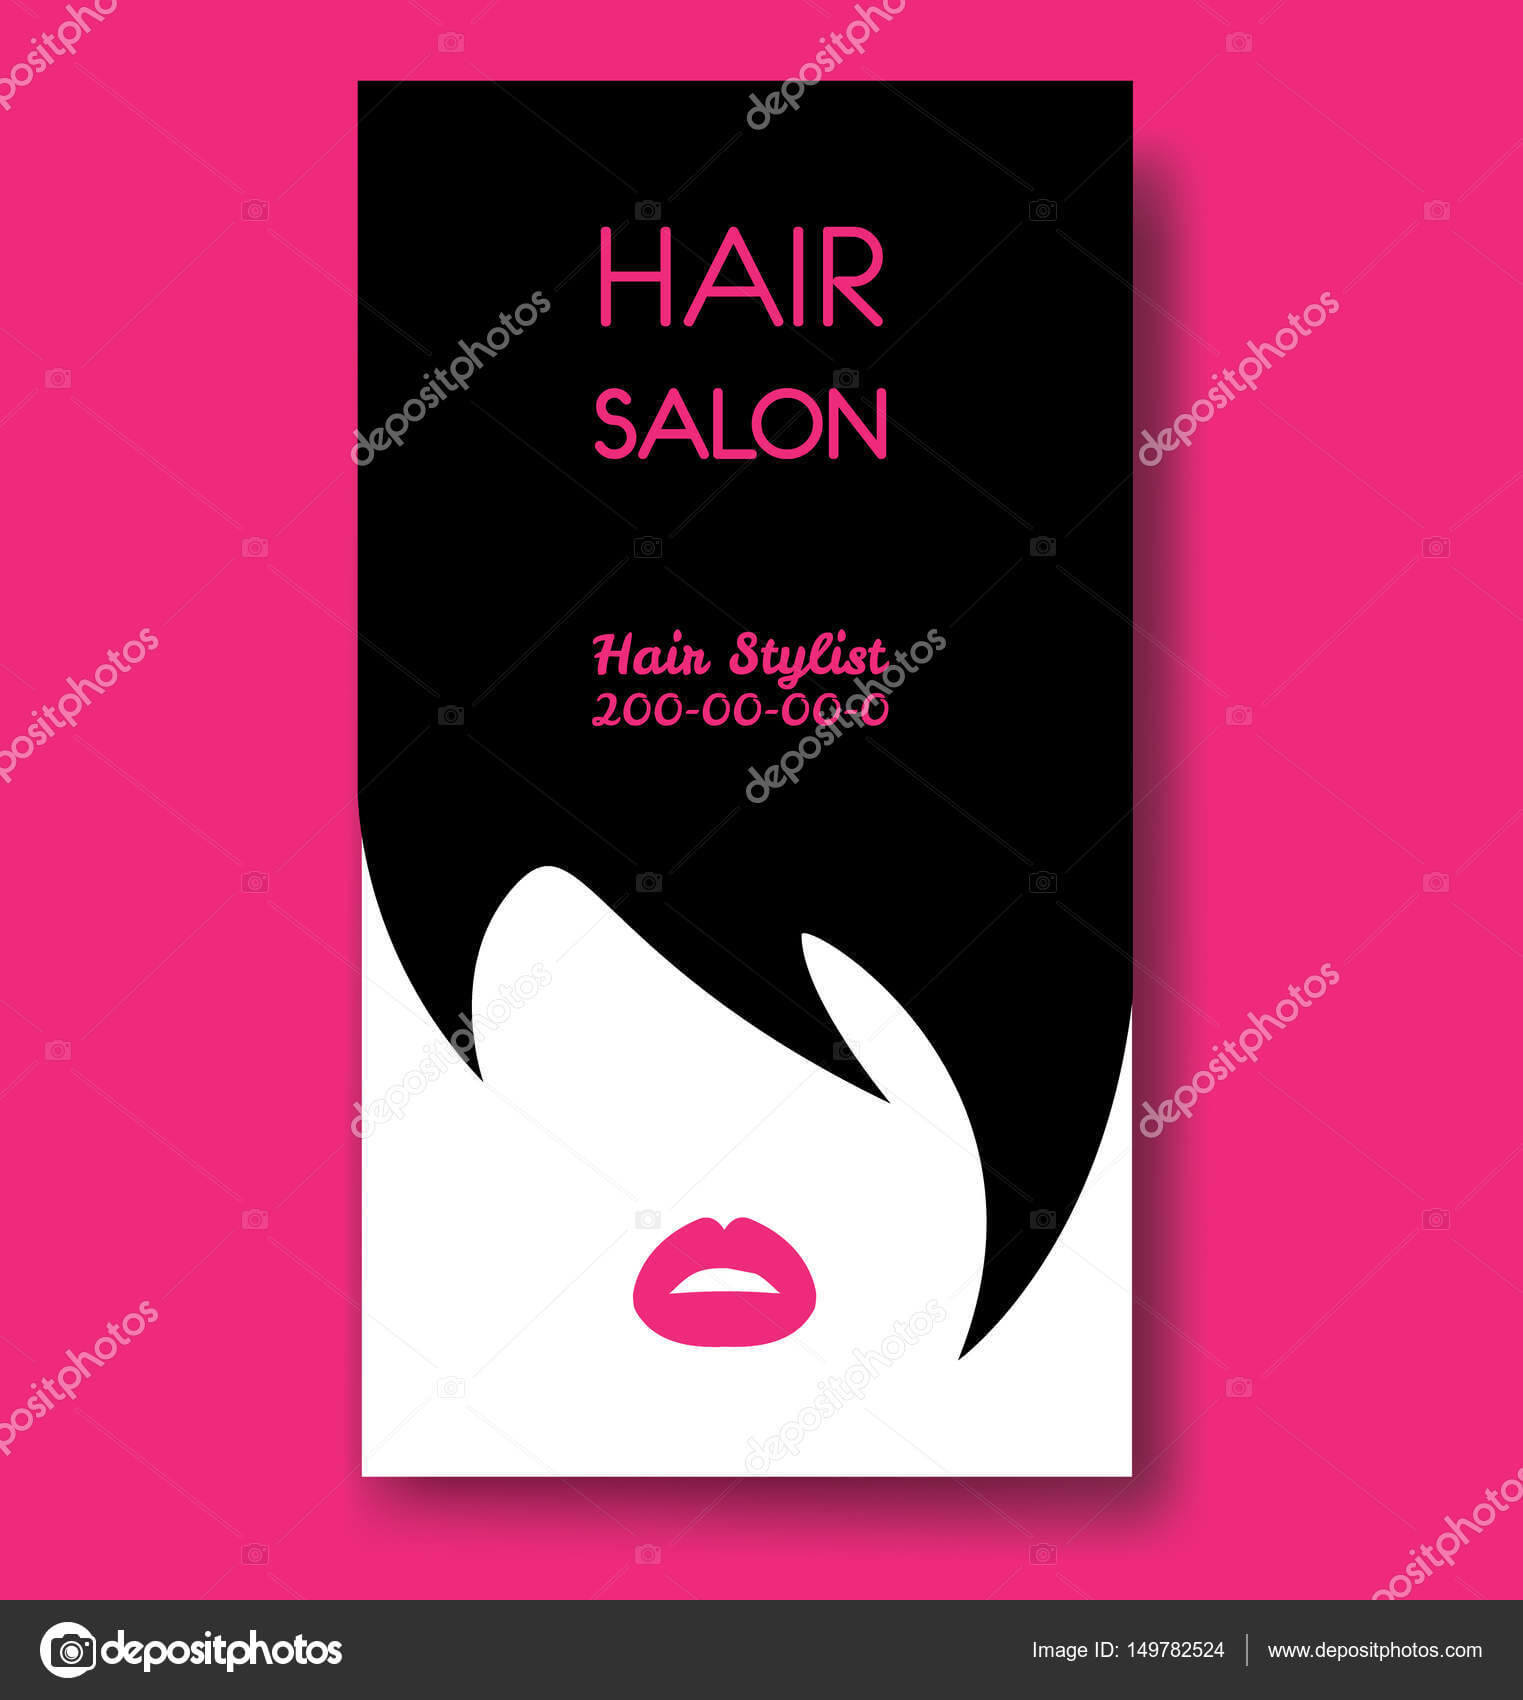 Hair Stylist Business Cards Examples | Hair Salon Business Within Hair Salon Business Card Template